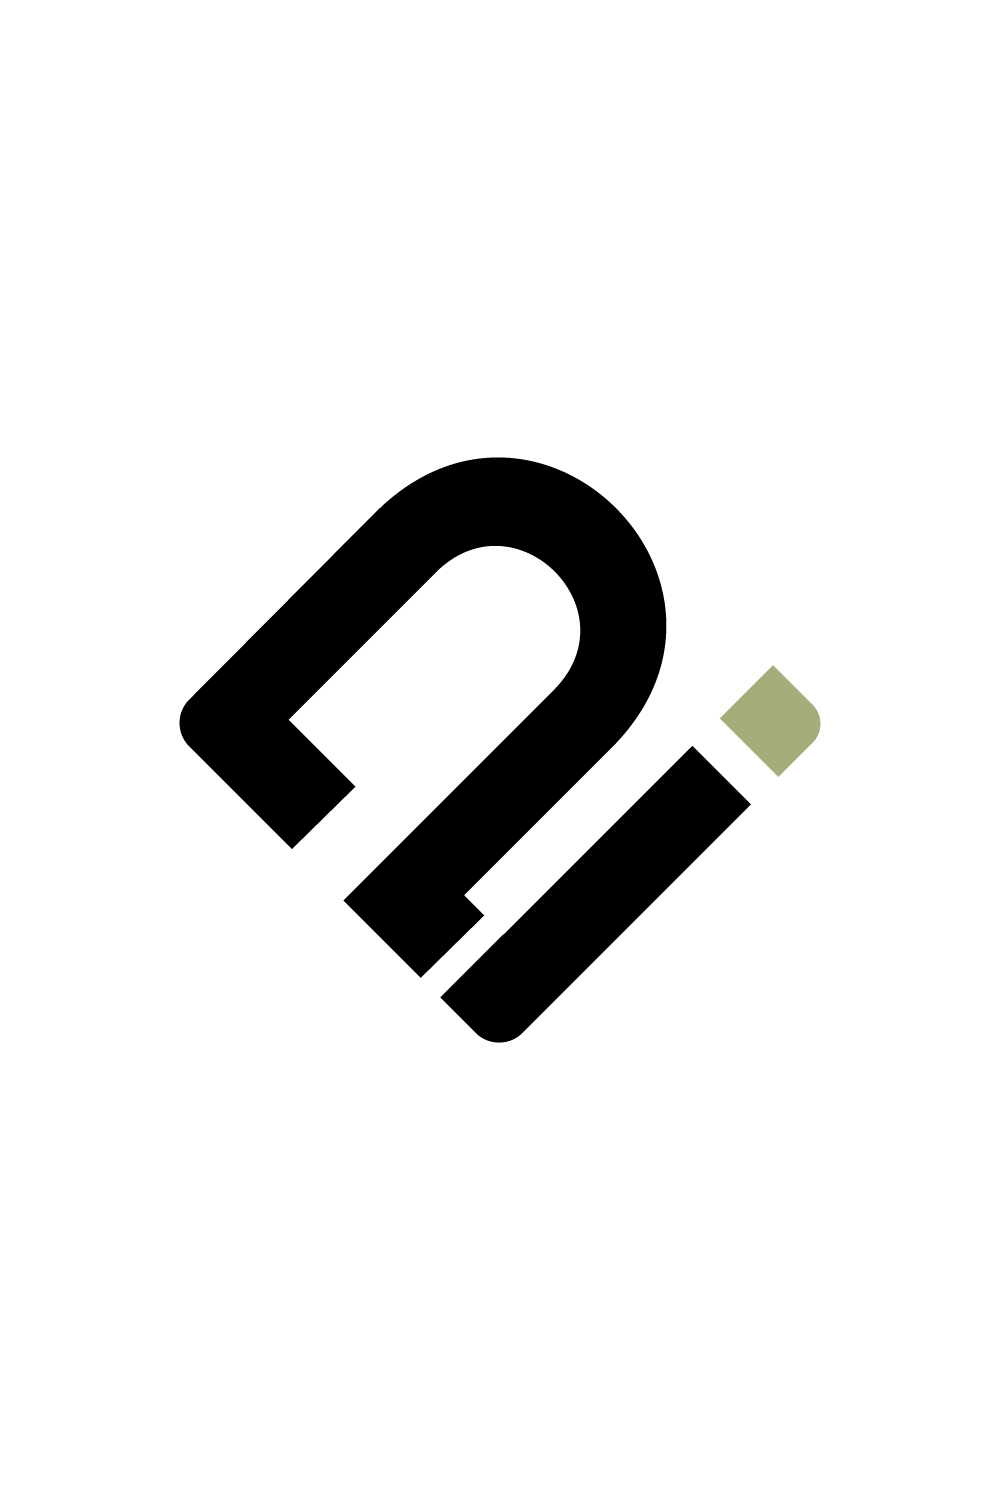 PI letter Logo design for your company pinterest preview image.